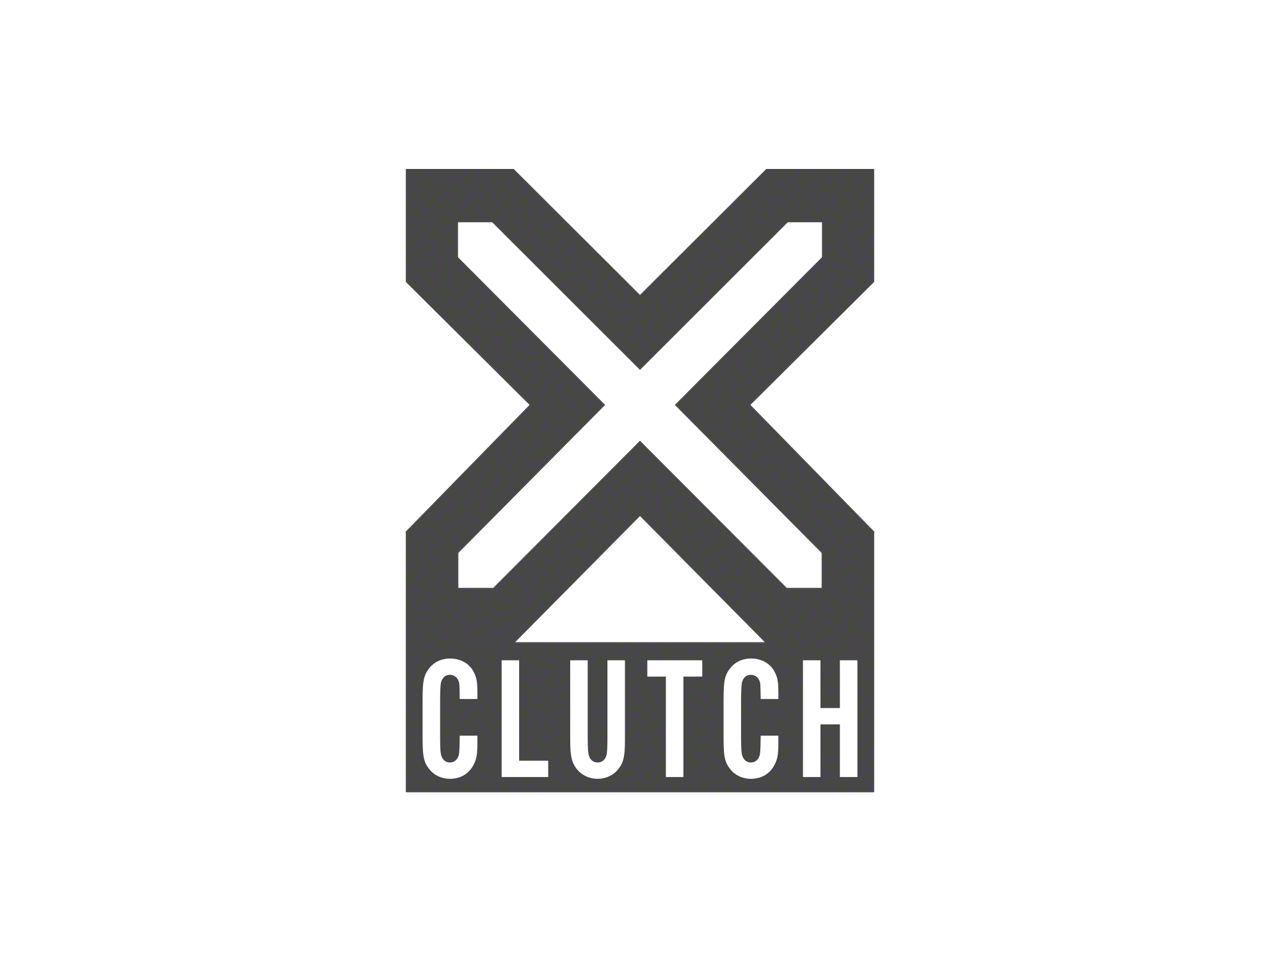 X-Clutch Parts